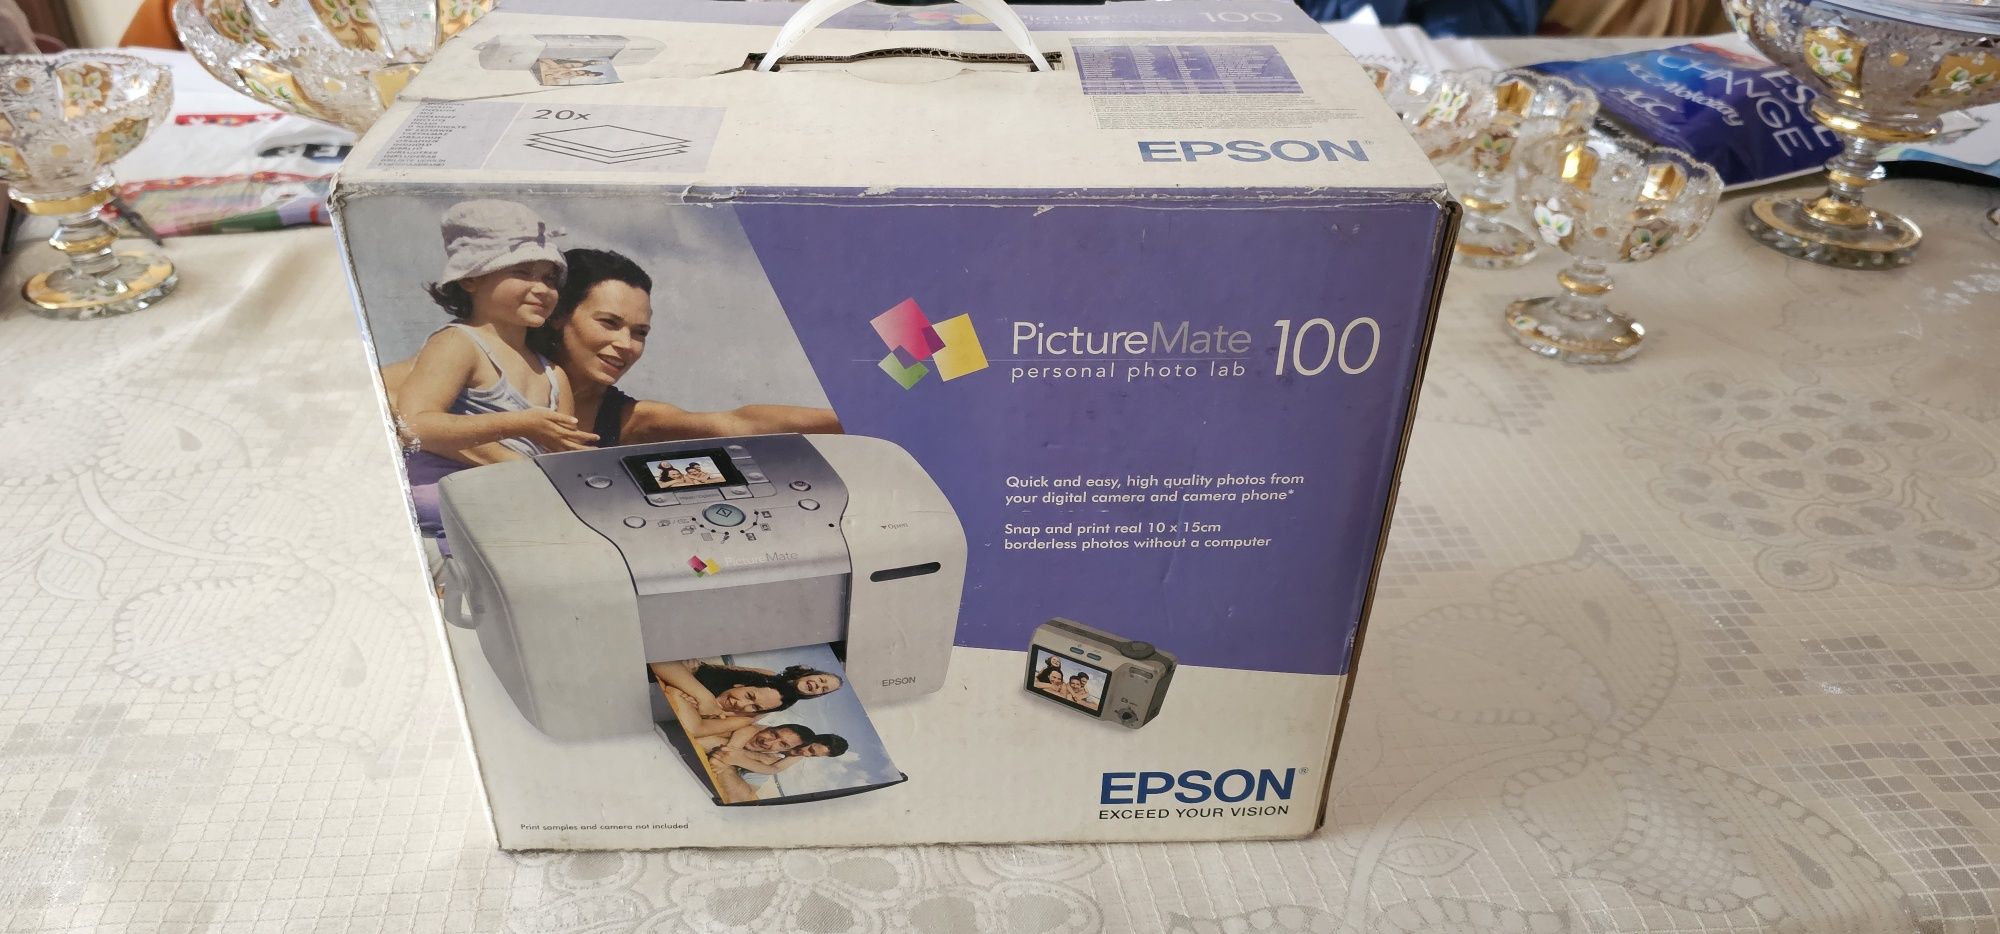 Принтер Epson Picture mate 100